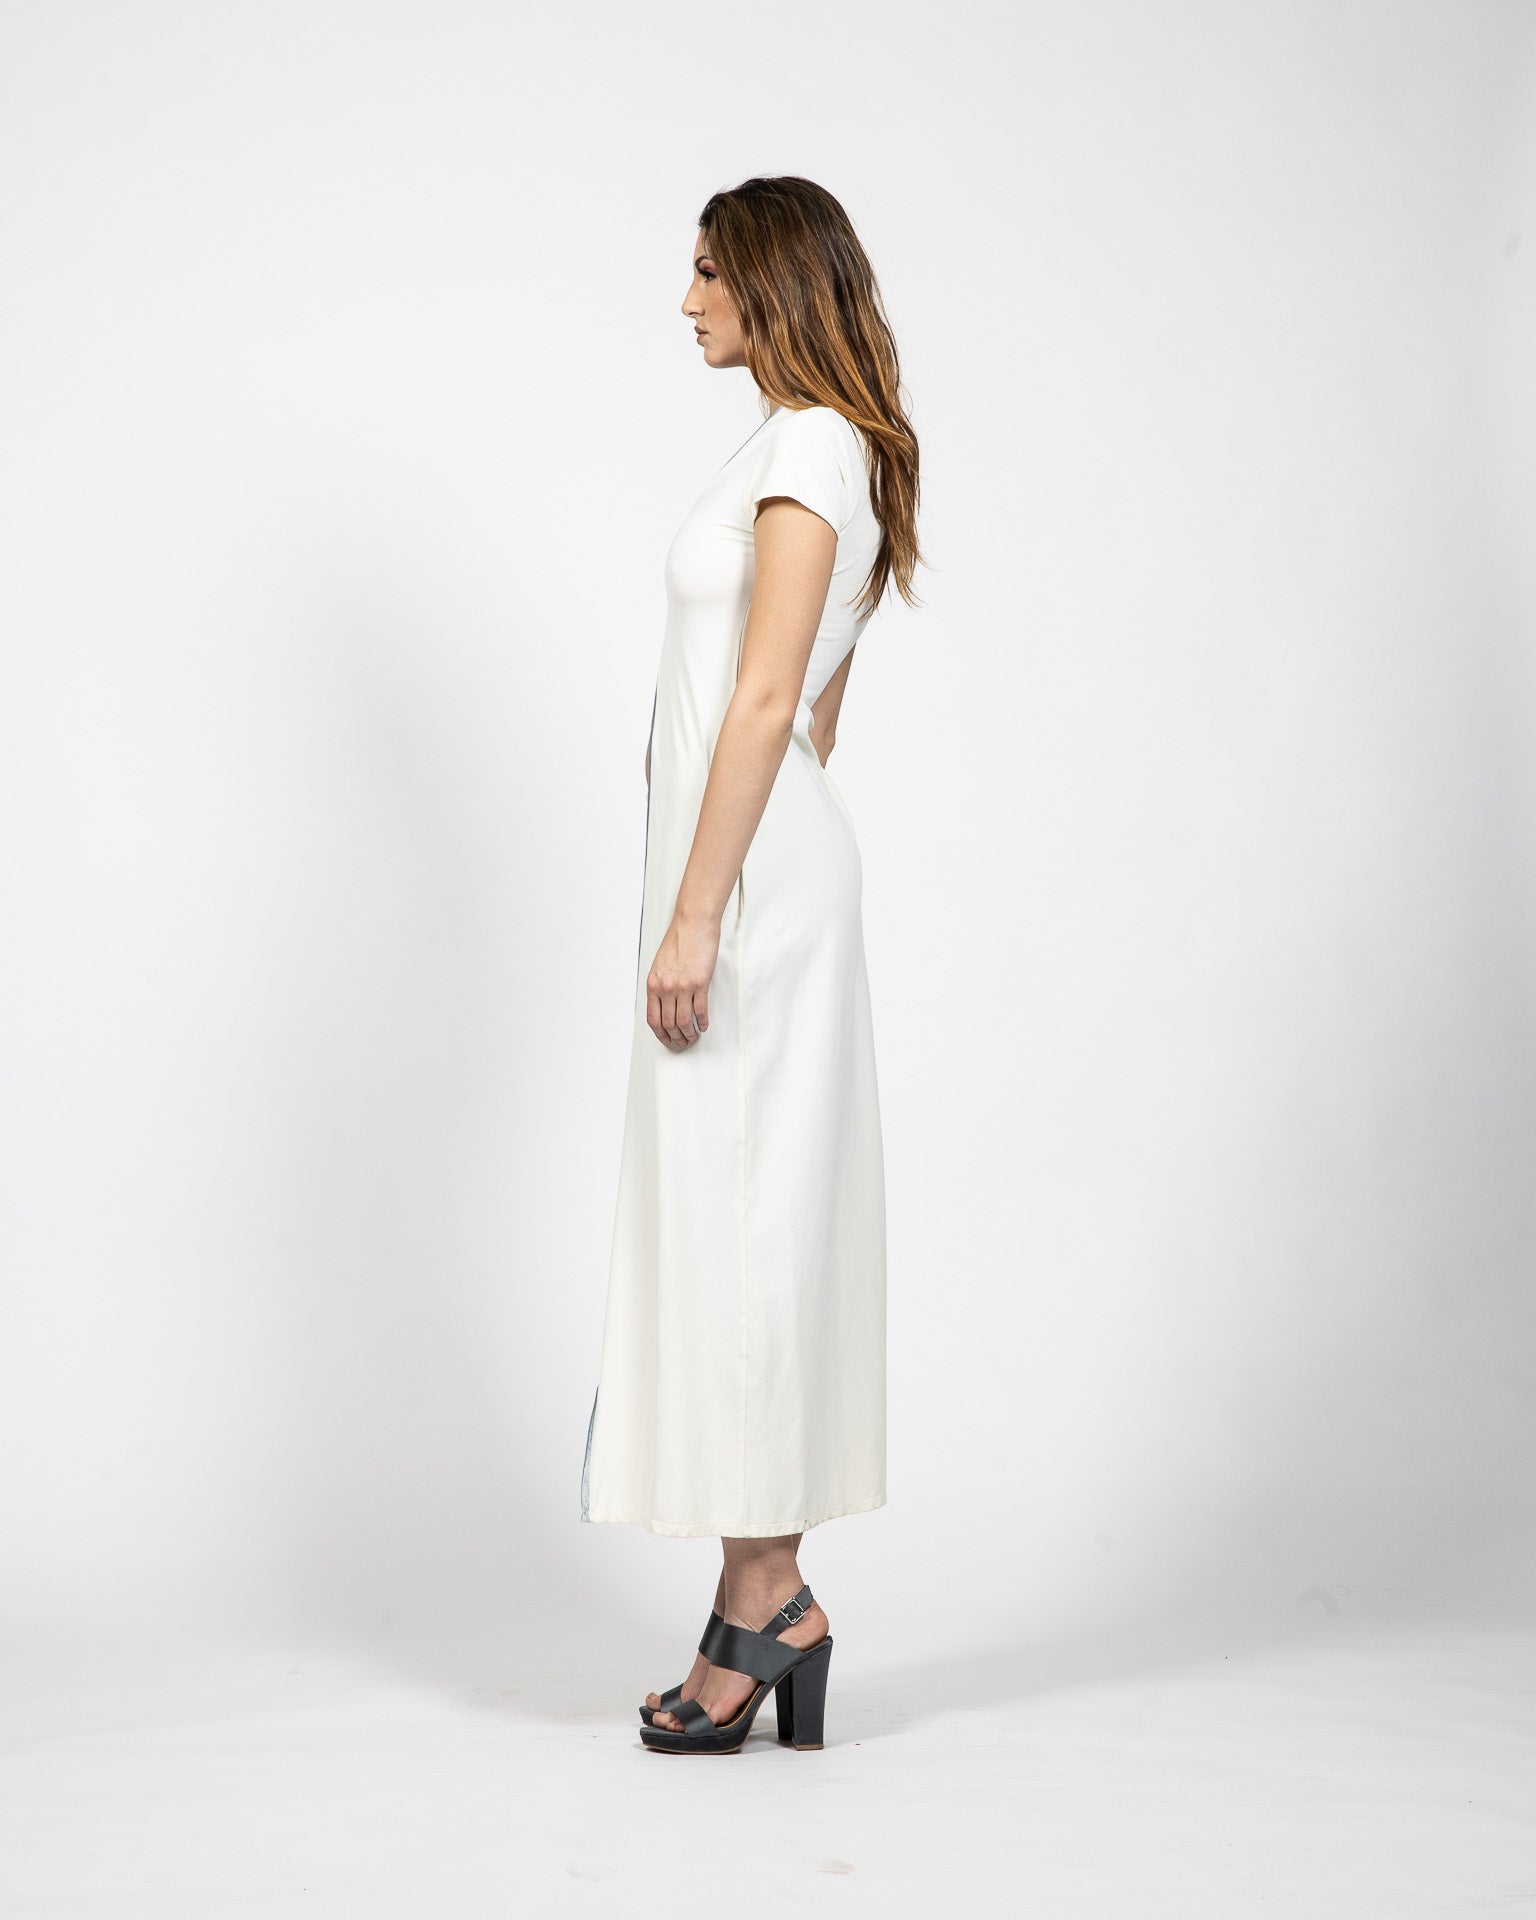 White V - Neck Long Pant Dress - Side View - Samuel Vartan